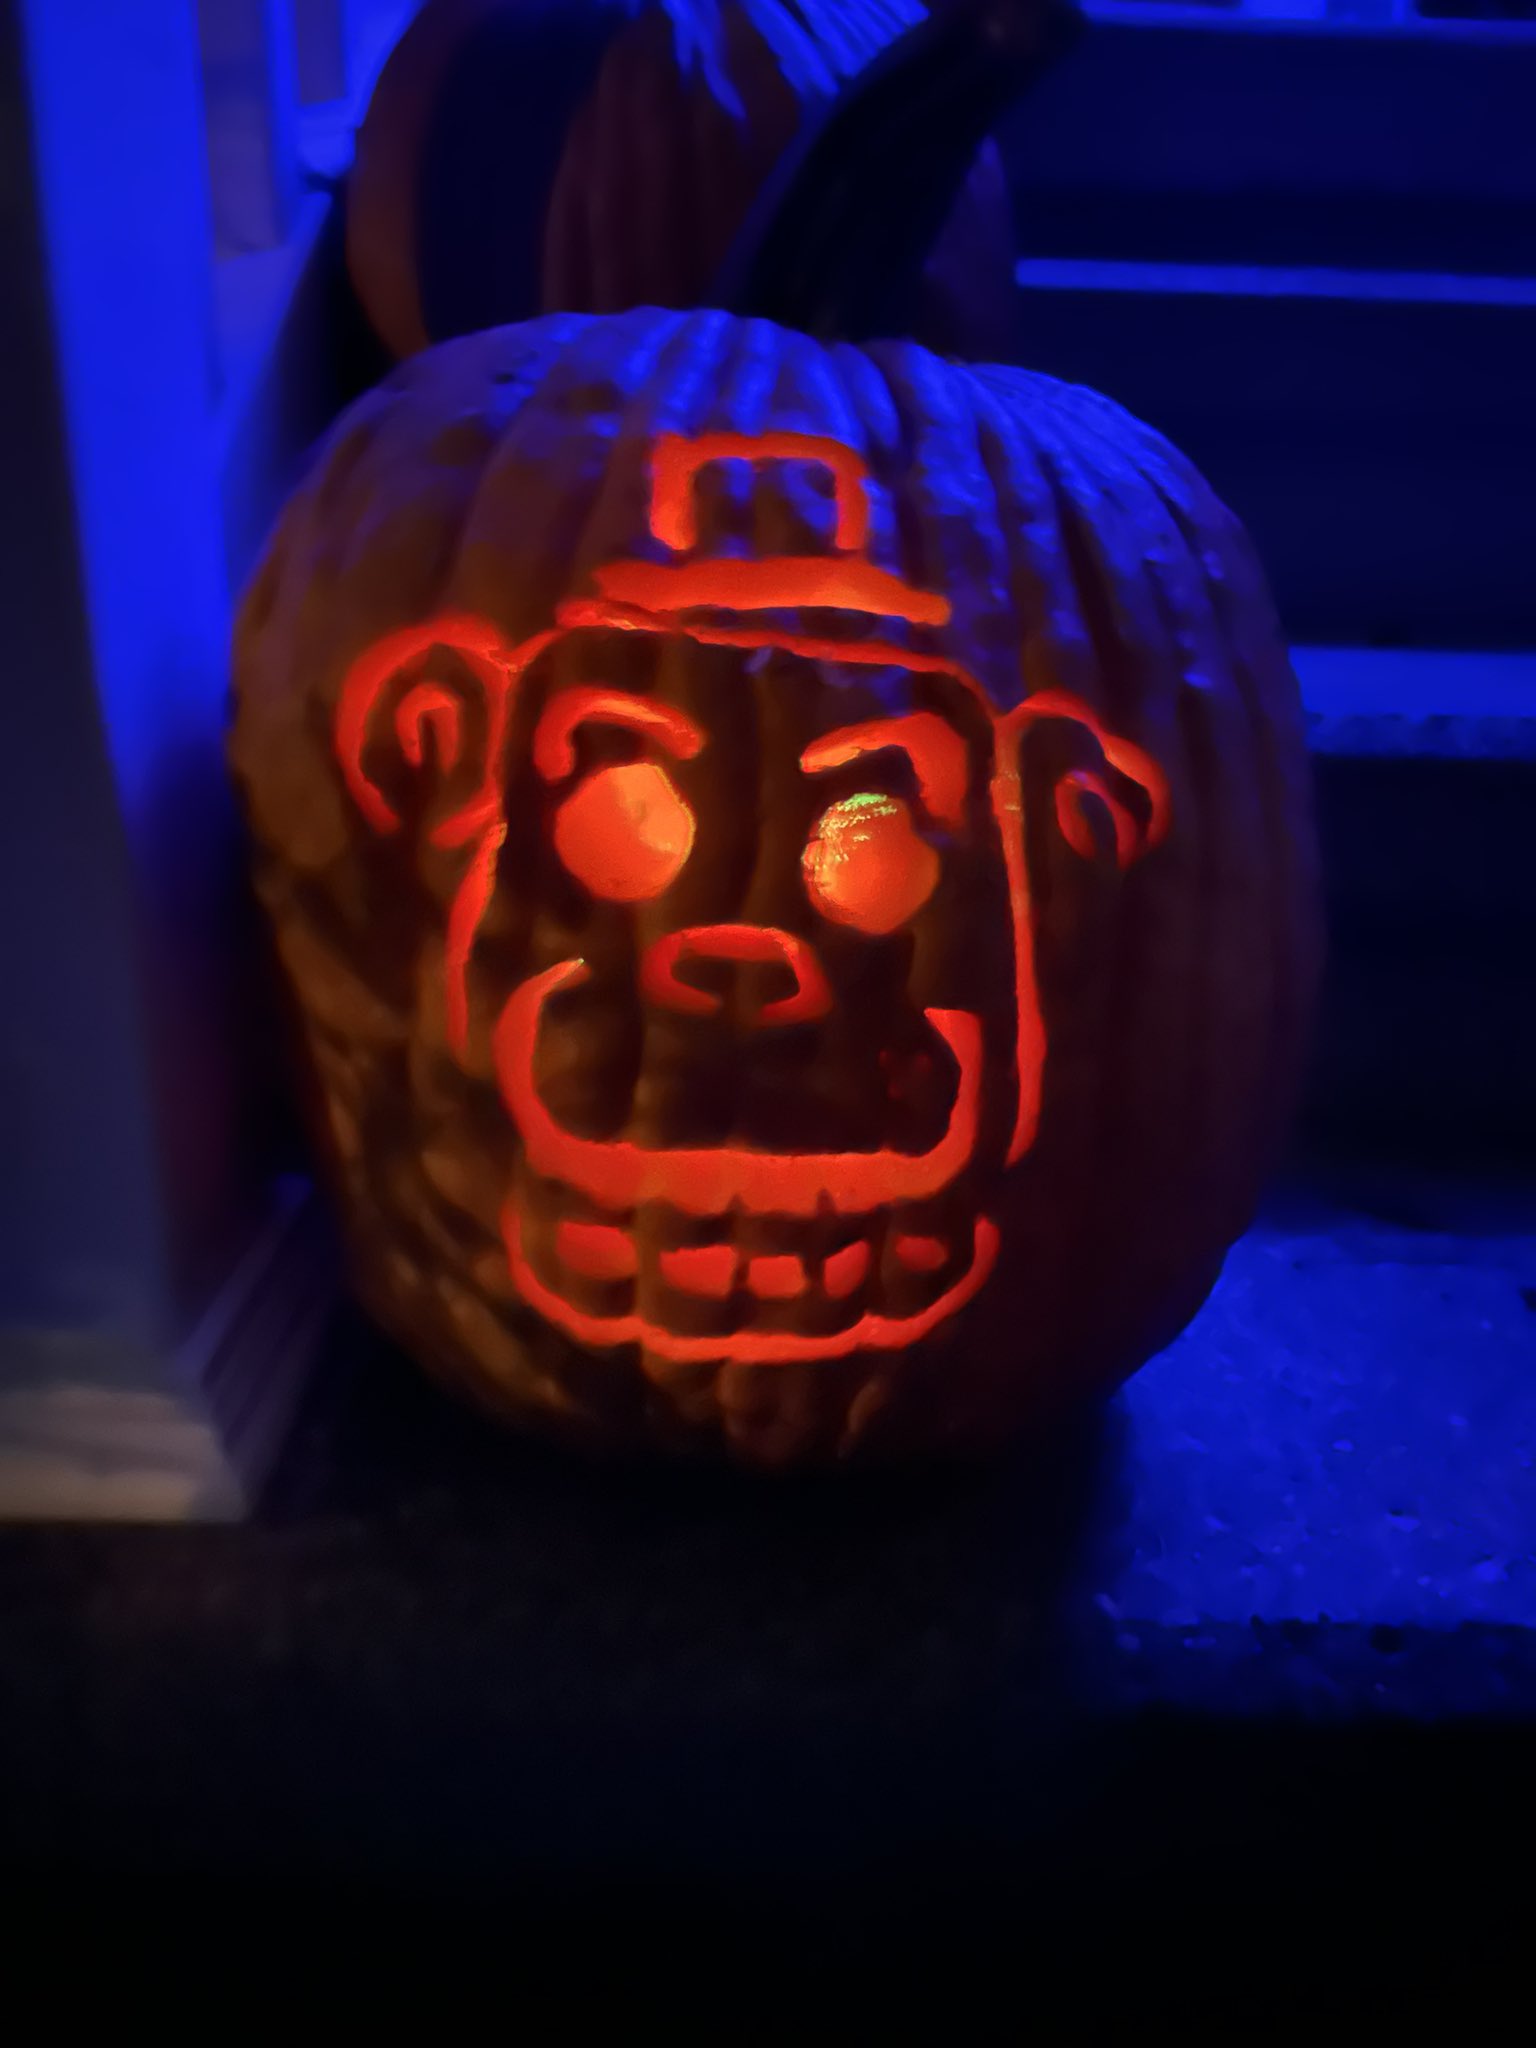 Chazz @StoneColdSteamer: Freddy Fazbear carved pumpkin, set on the front doorsteps in the dark